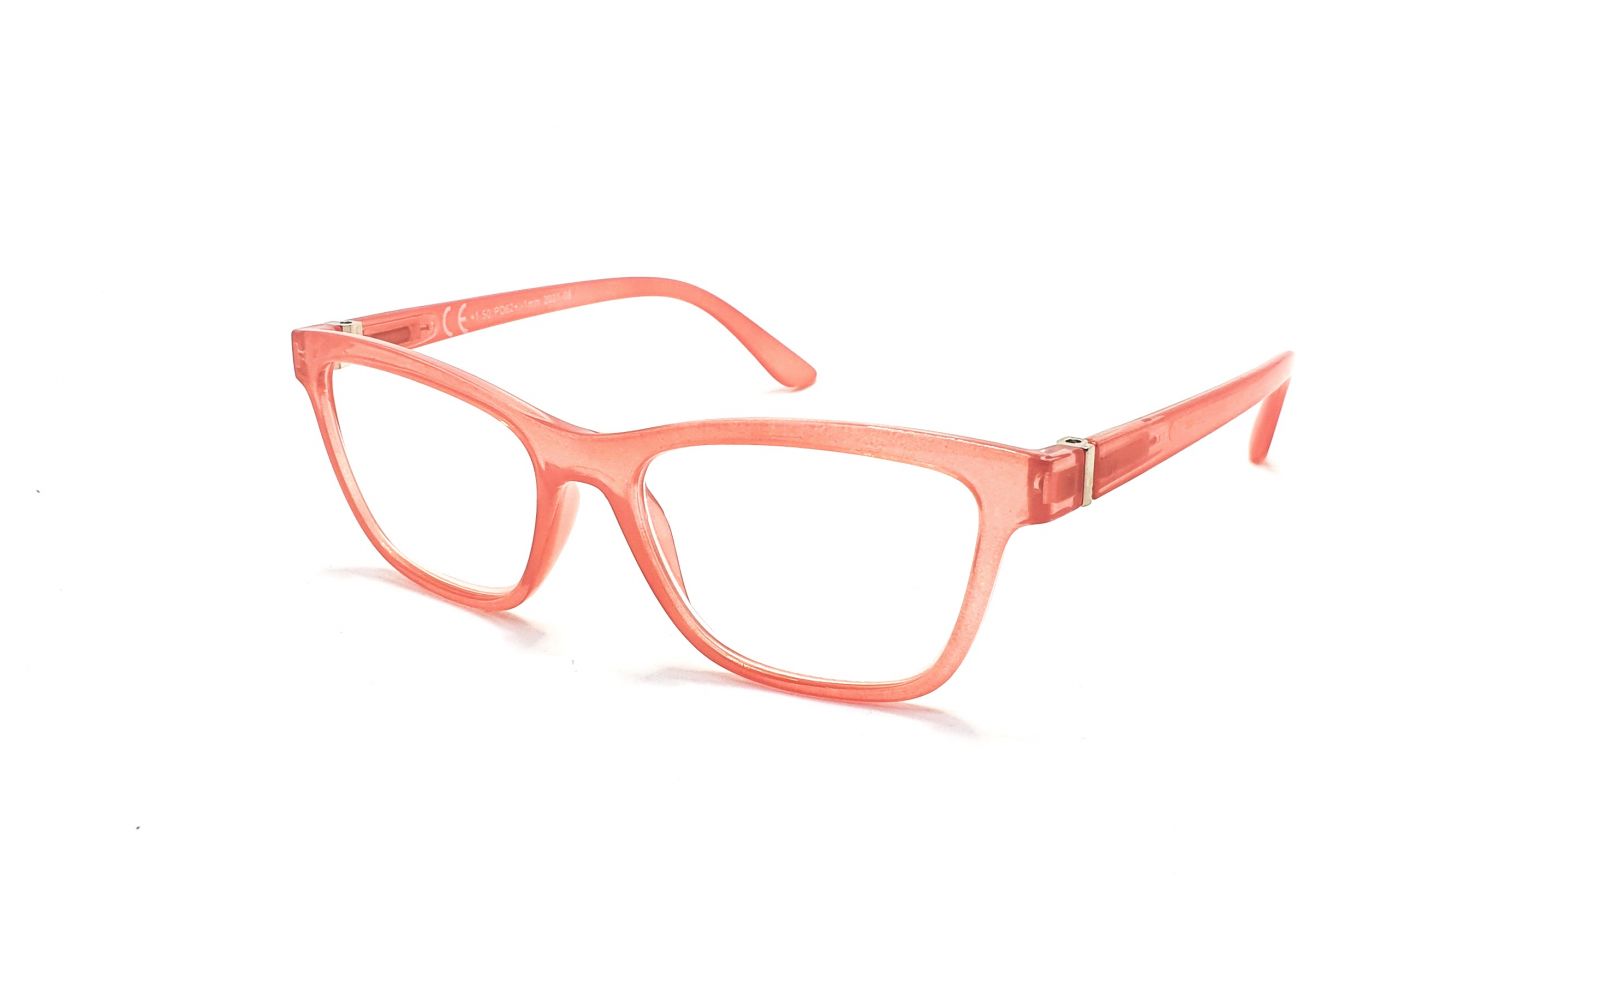 Dioptrické brýle R6225 / +1,50 flex pink